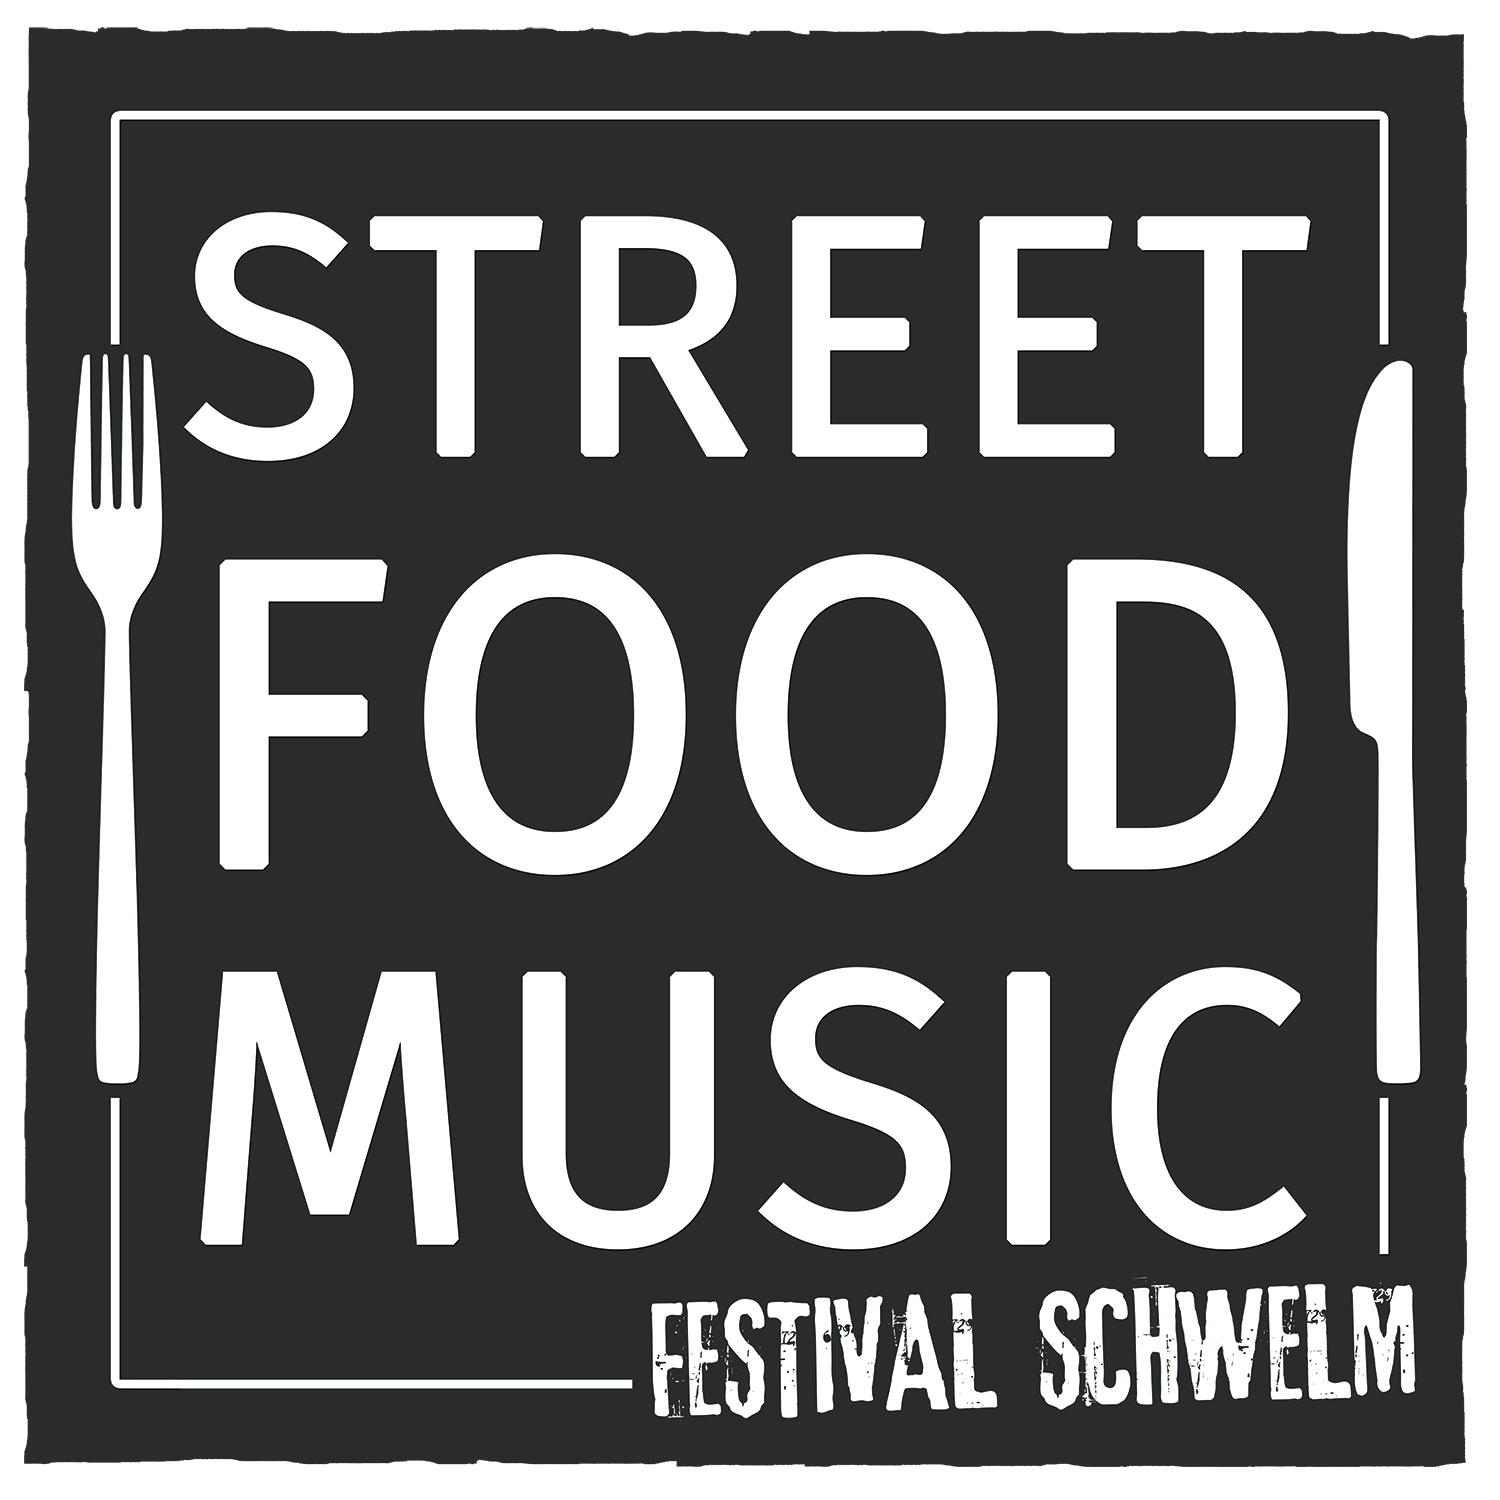 Street Food & Music Festival Schwelm